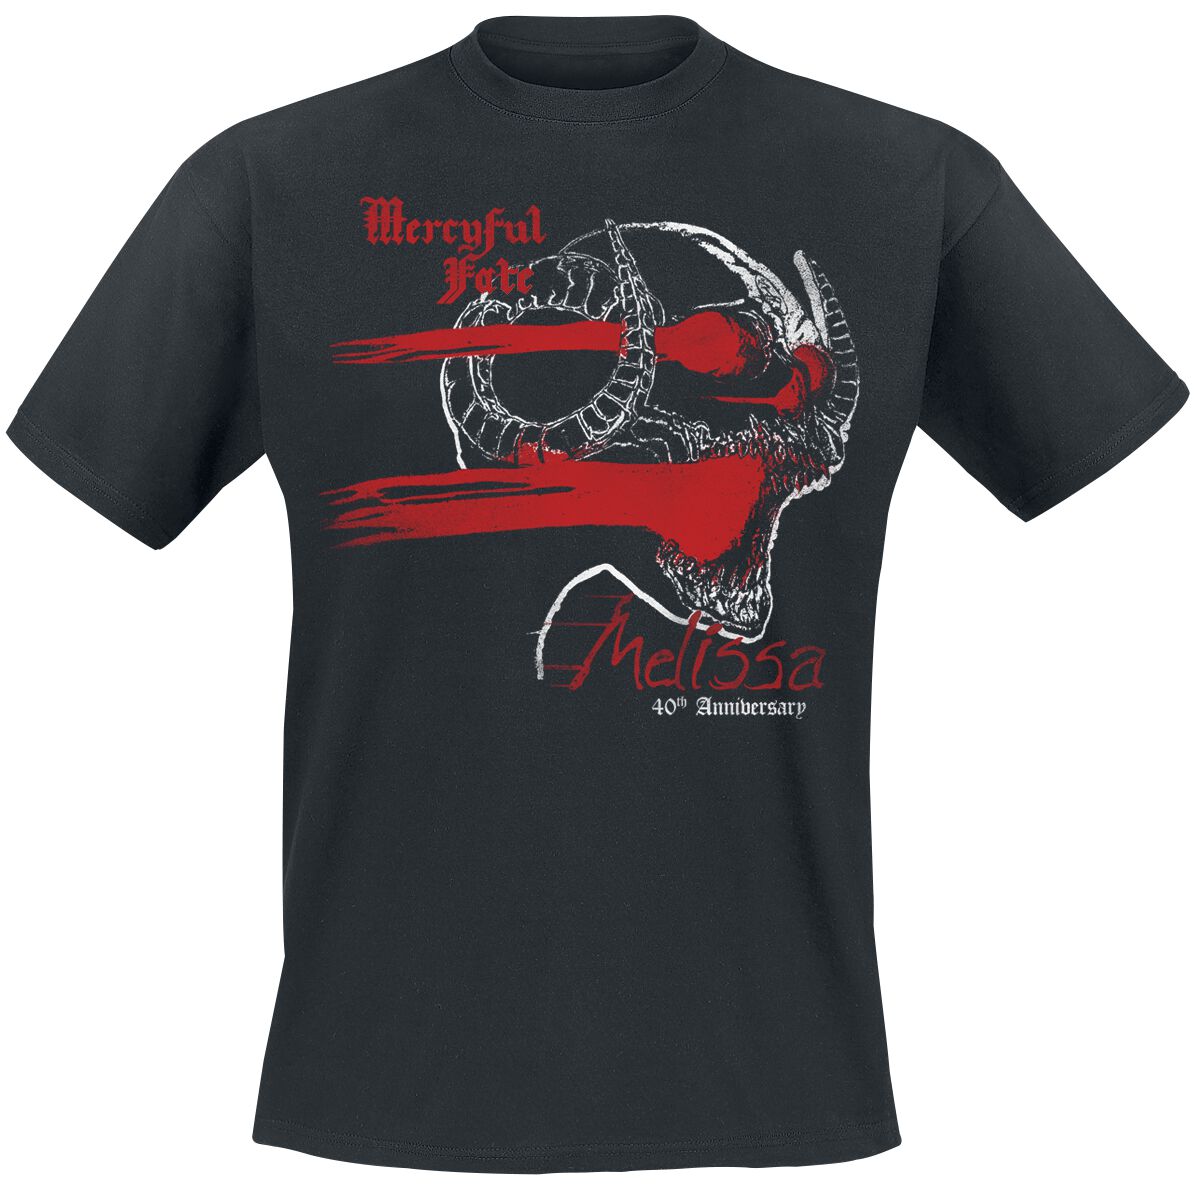 Mercyful Fate Melissa 40th Anniversary Cross T-Shirt schwarz in L